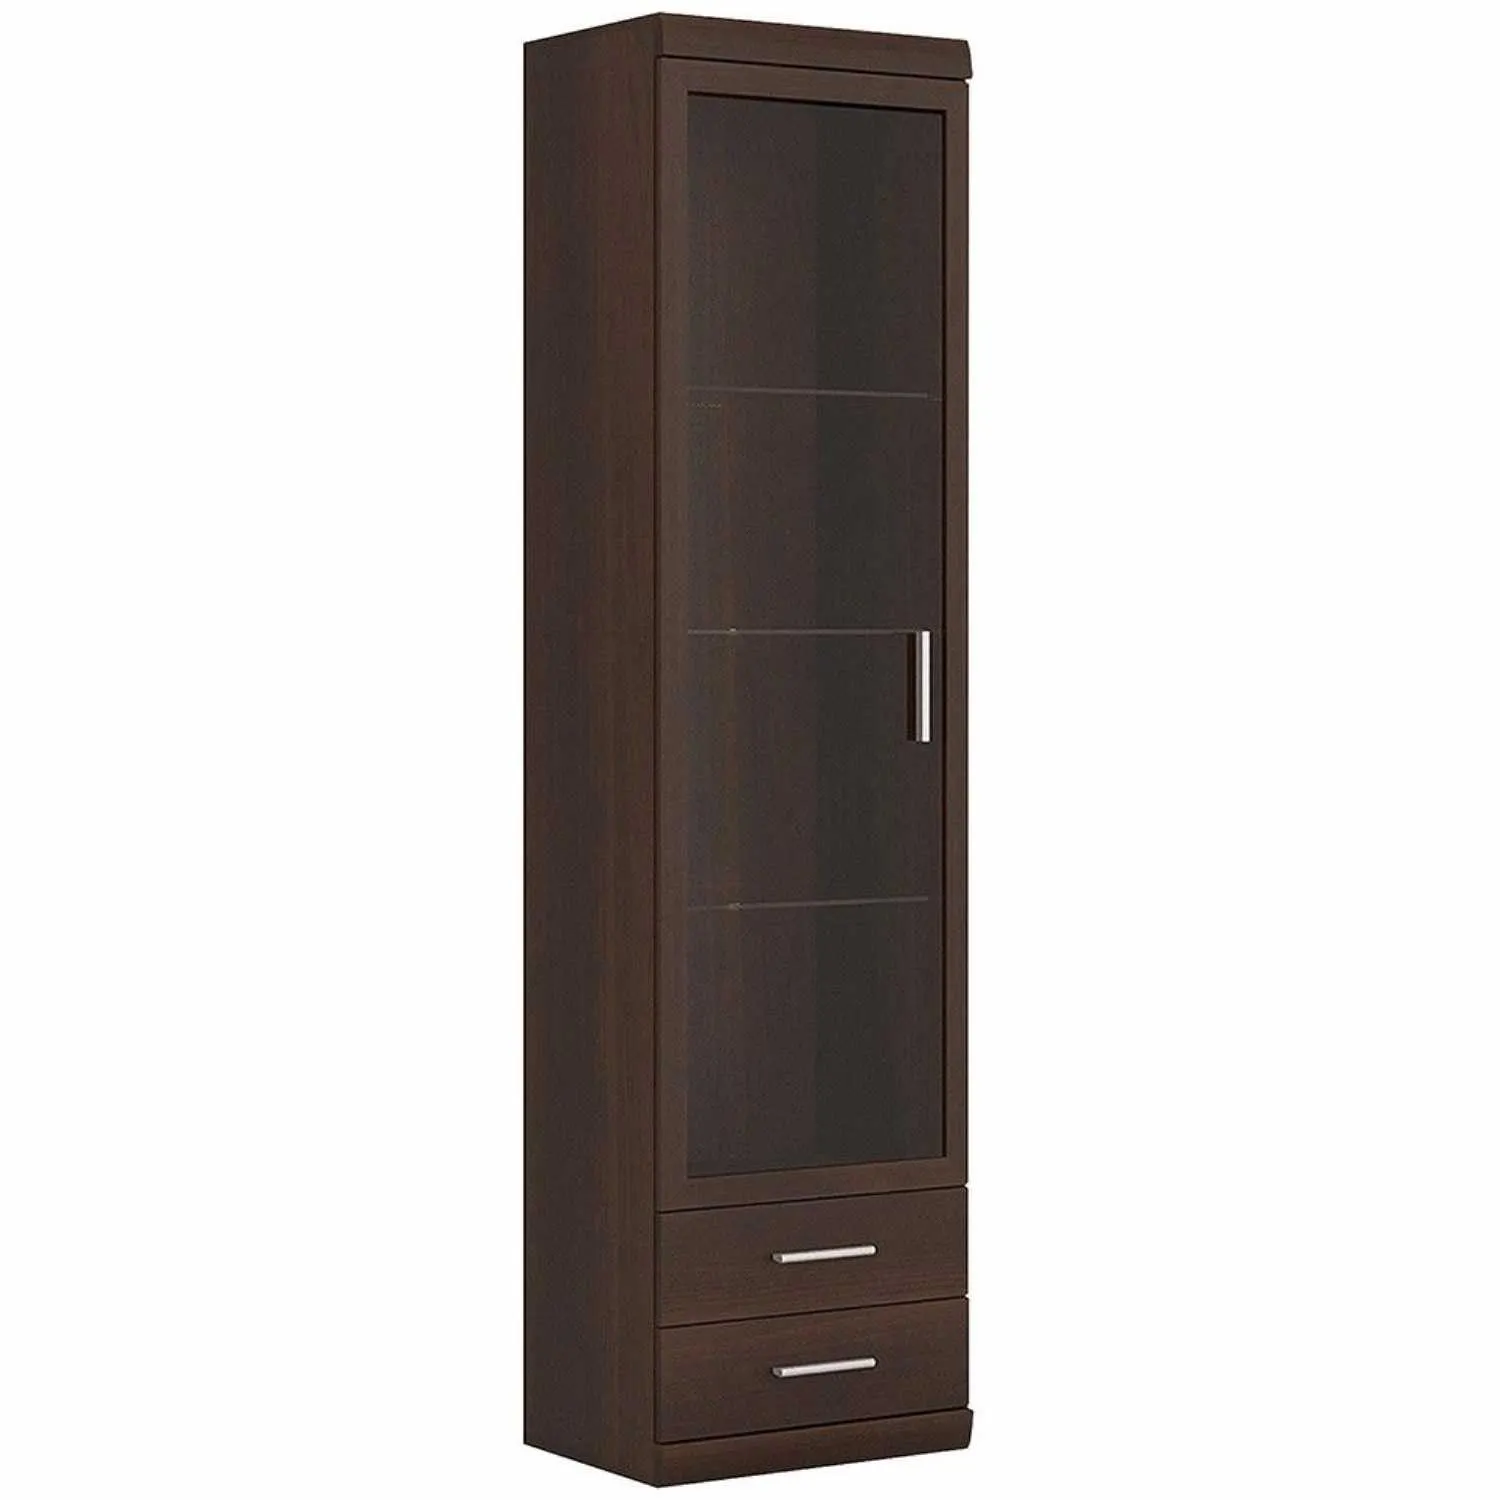 Dark Mahogany Tall Slim Glazed 1 Door 2 Drawer Narrow Display Cabinet